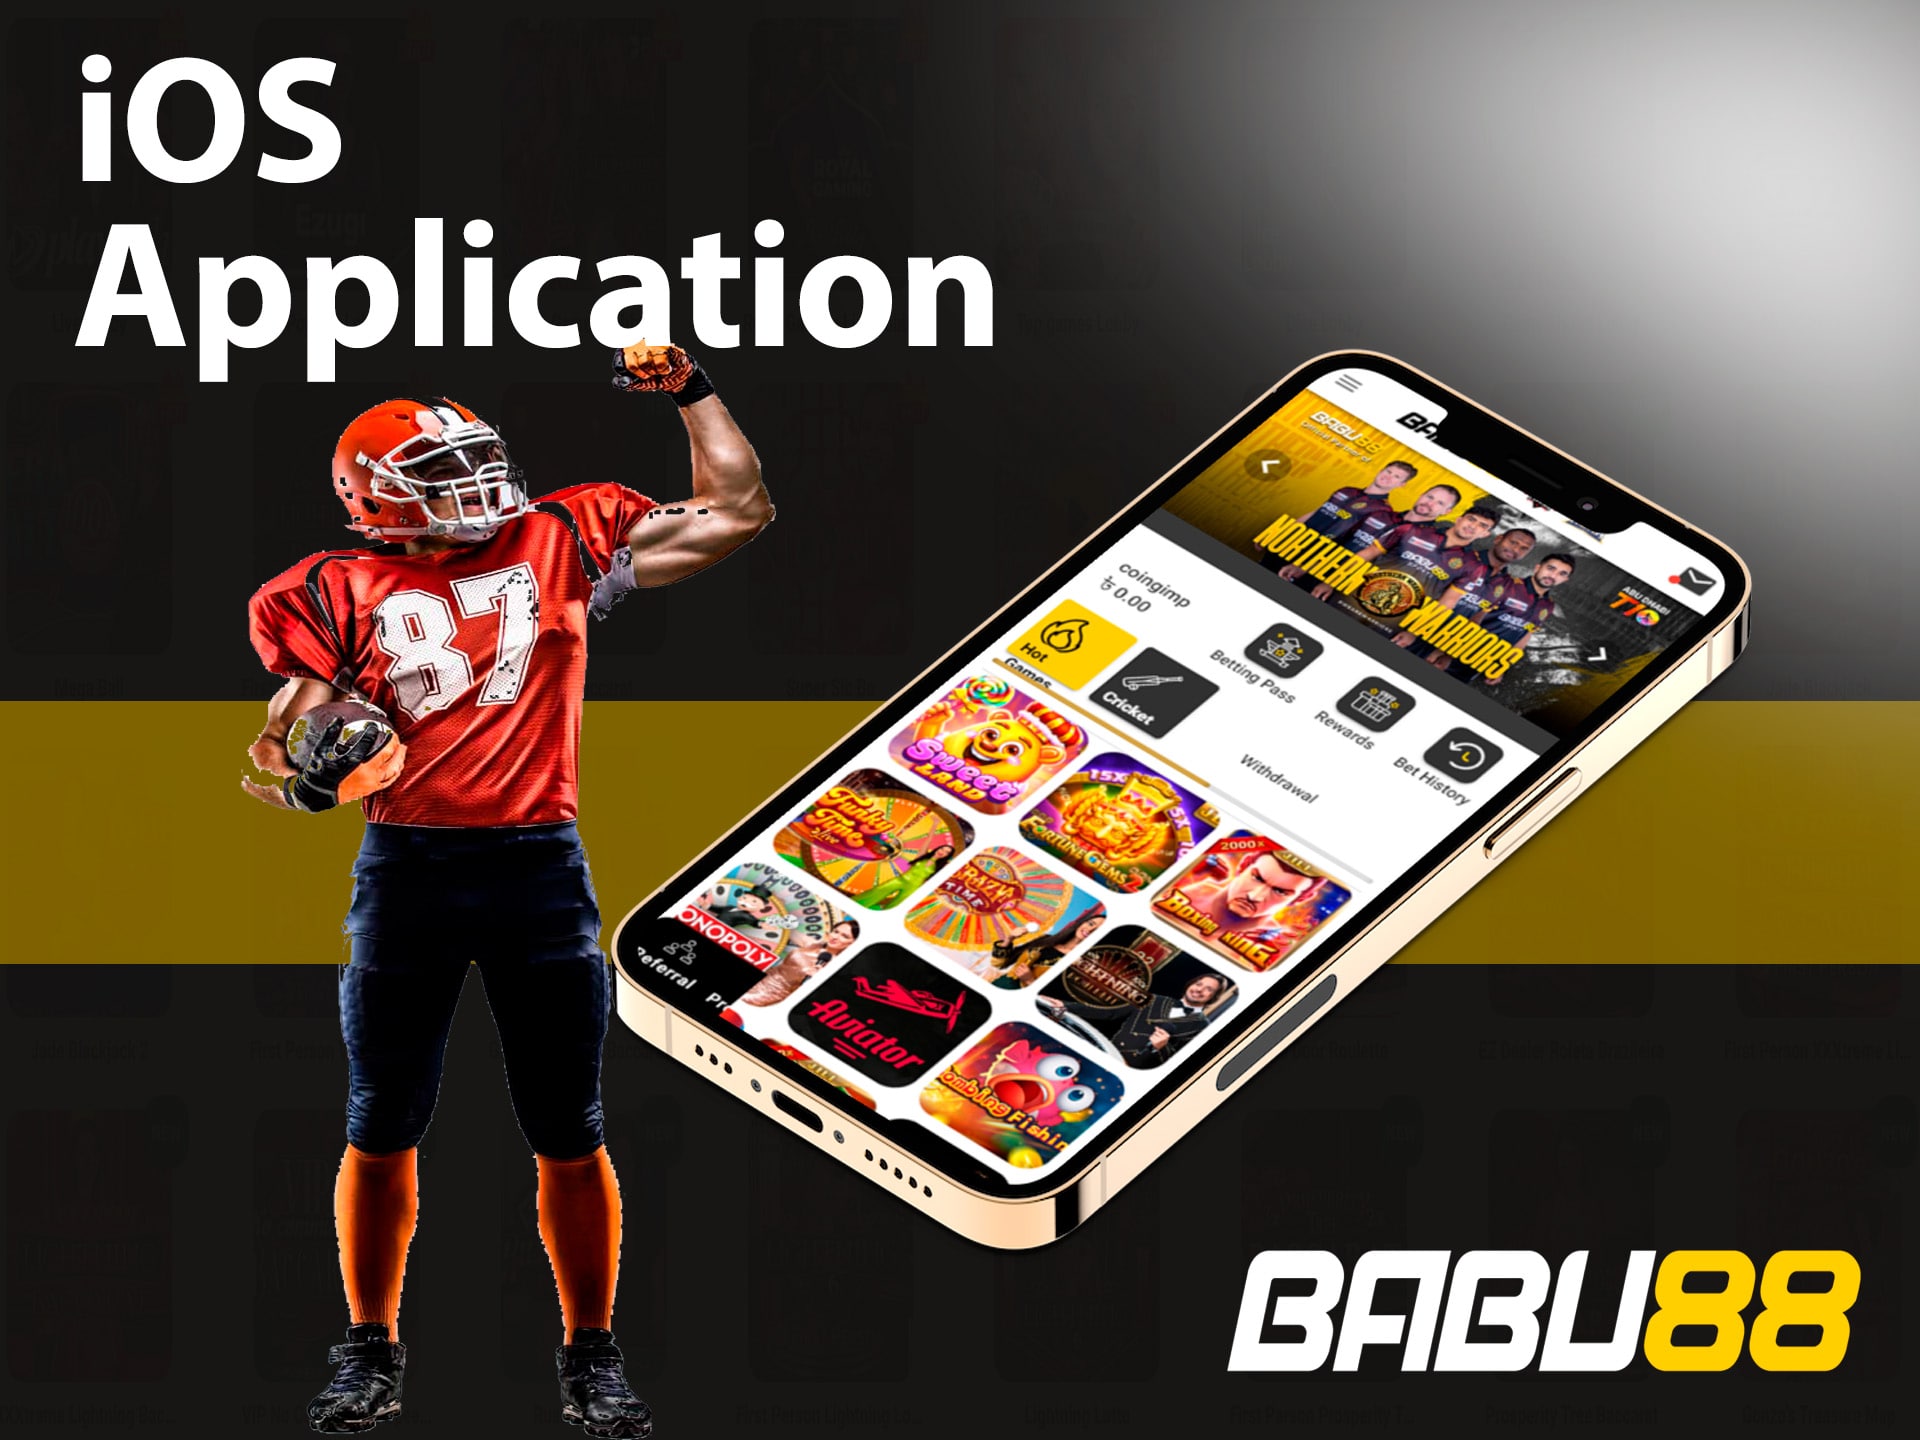 Babu88 App for iOS